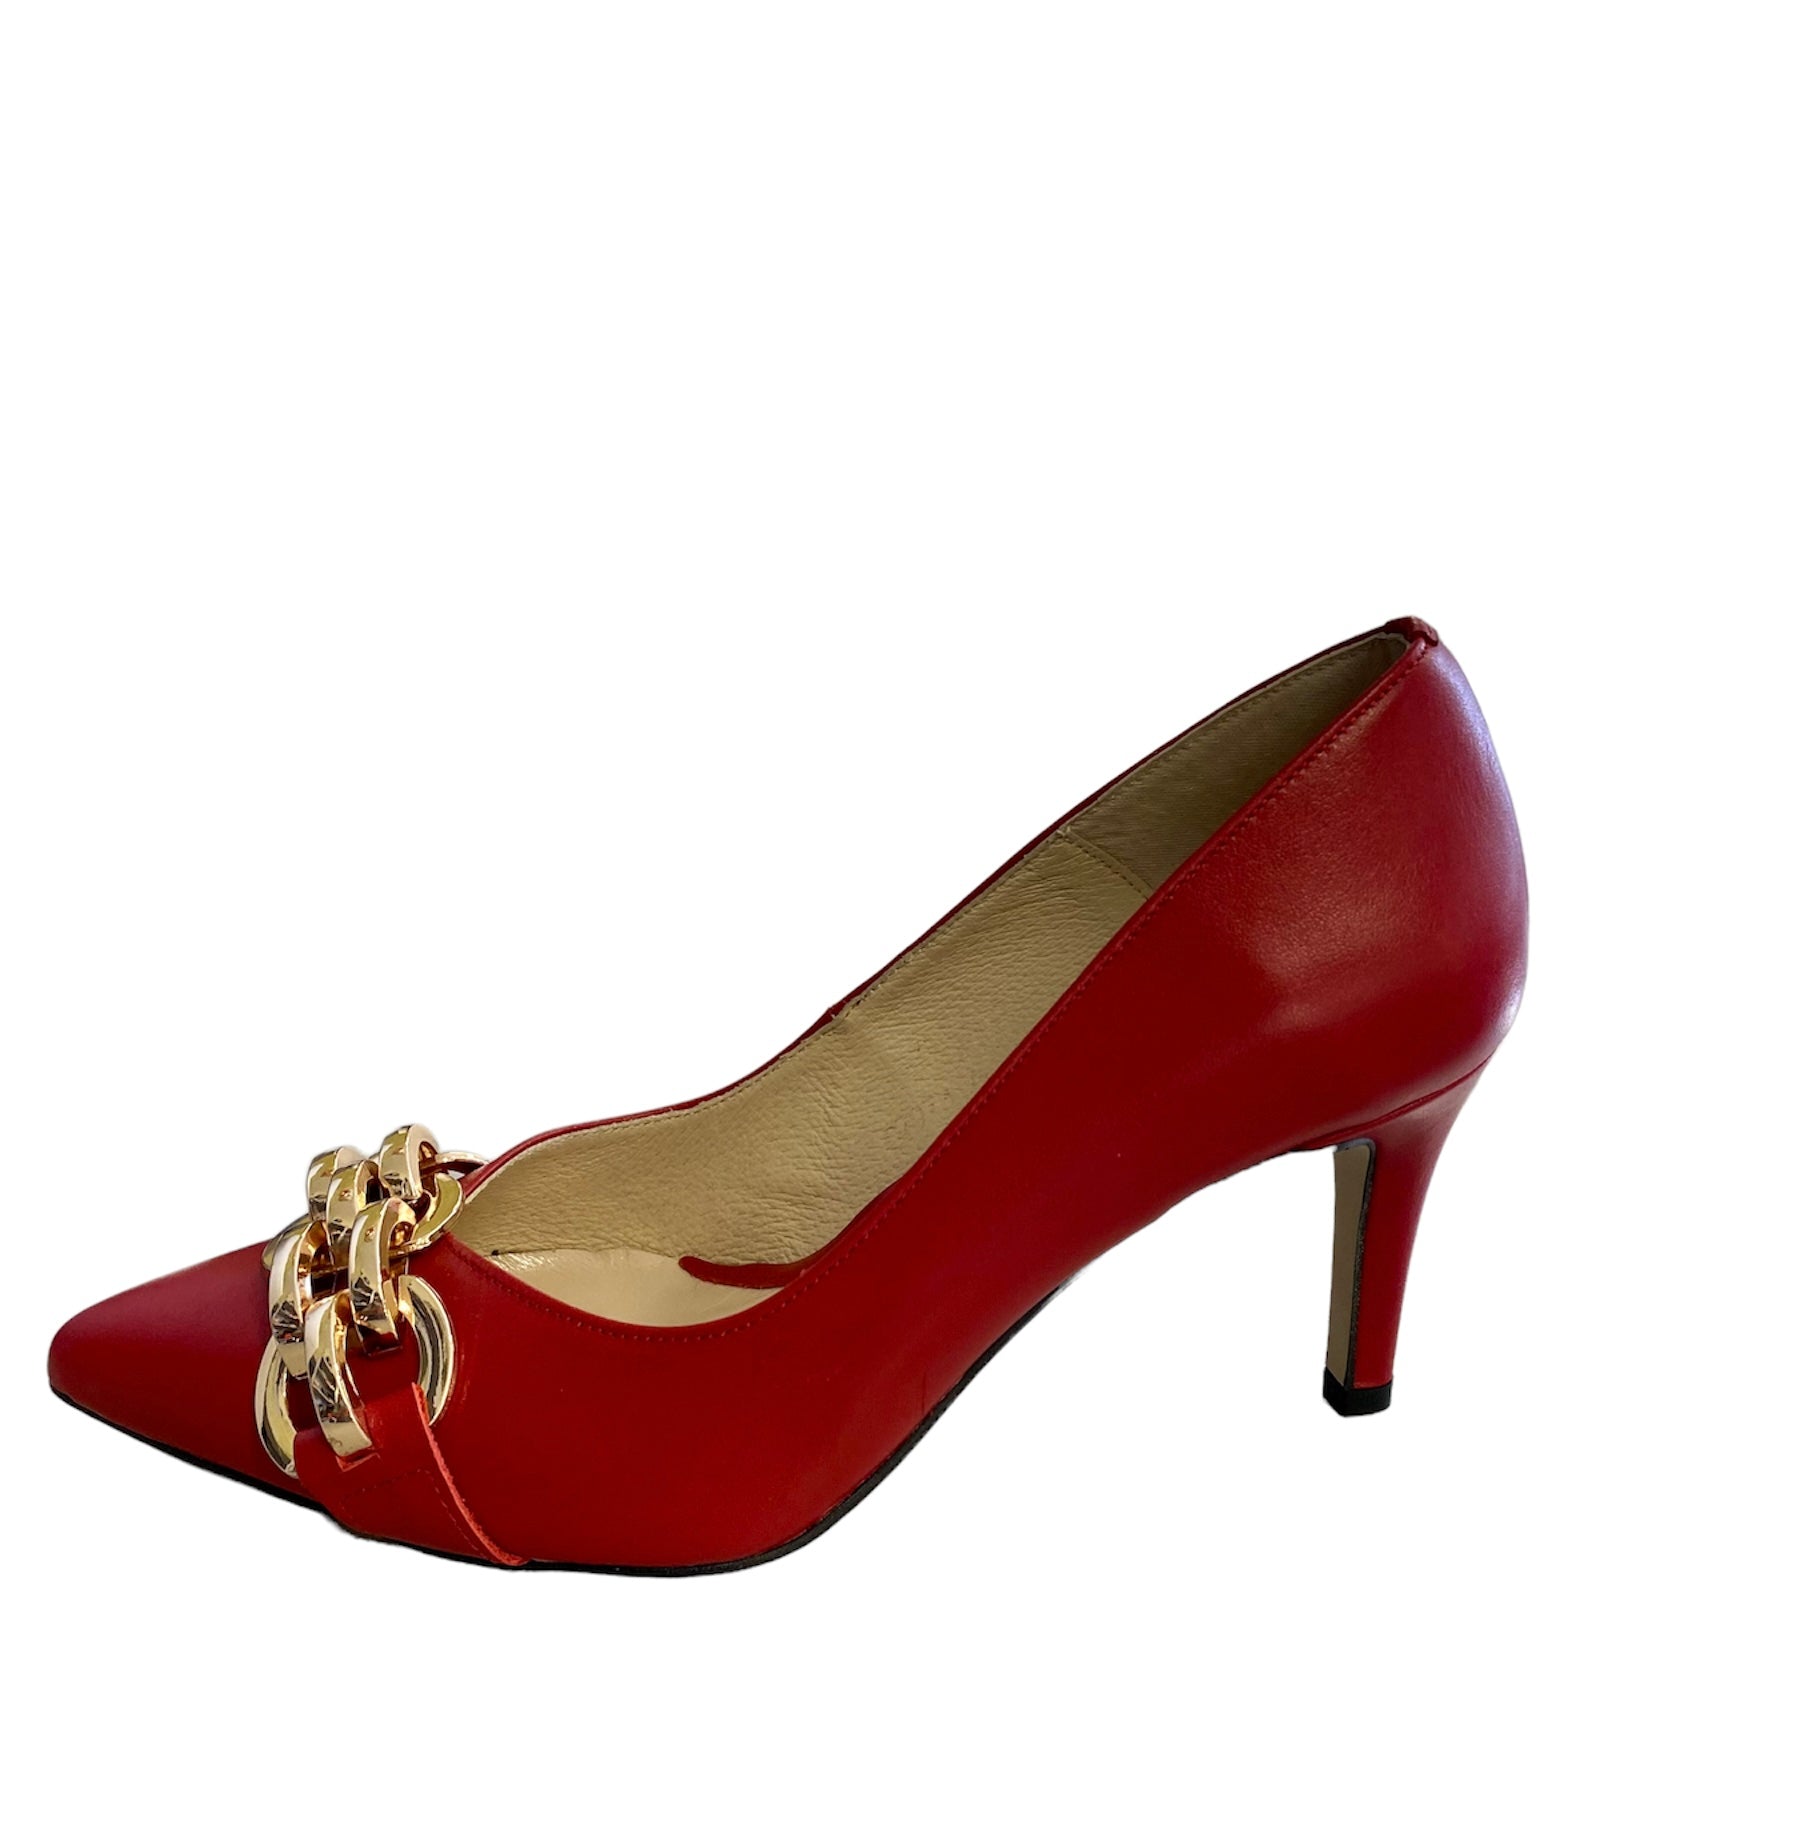 Emis Court Shoe in Red